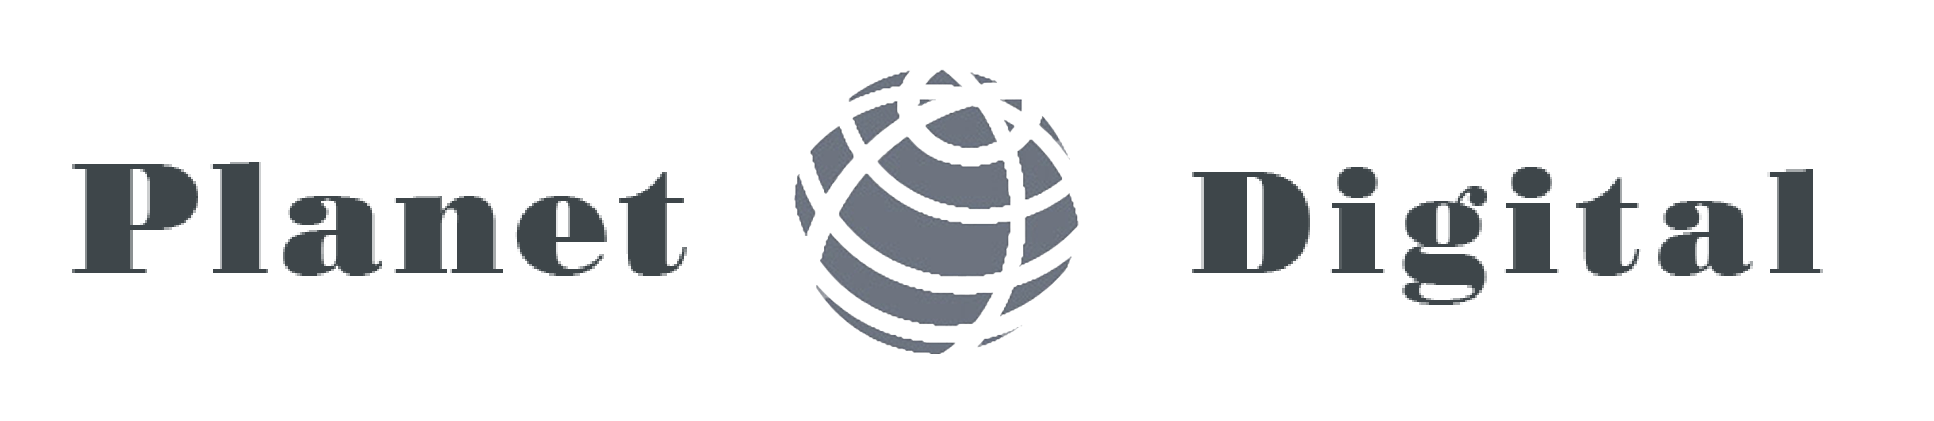 Planet Digital logo